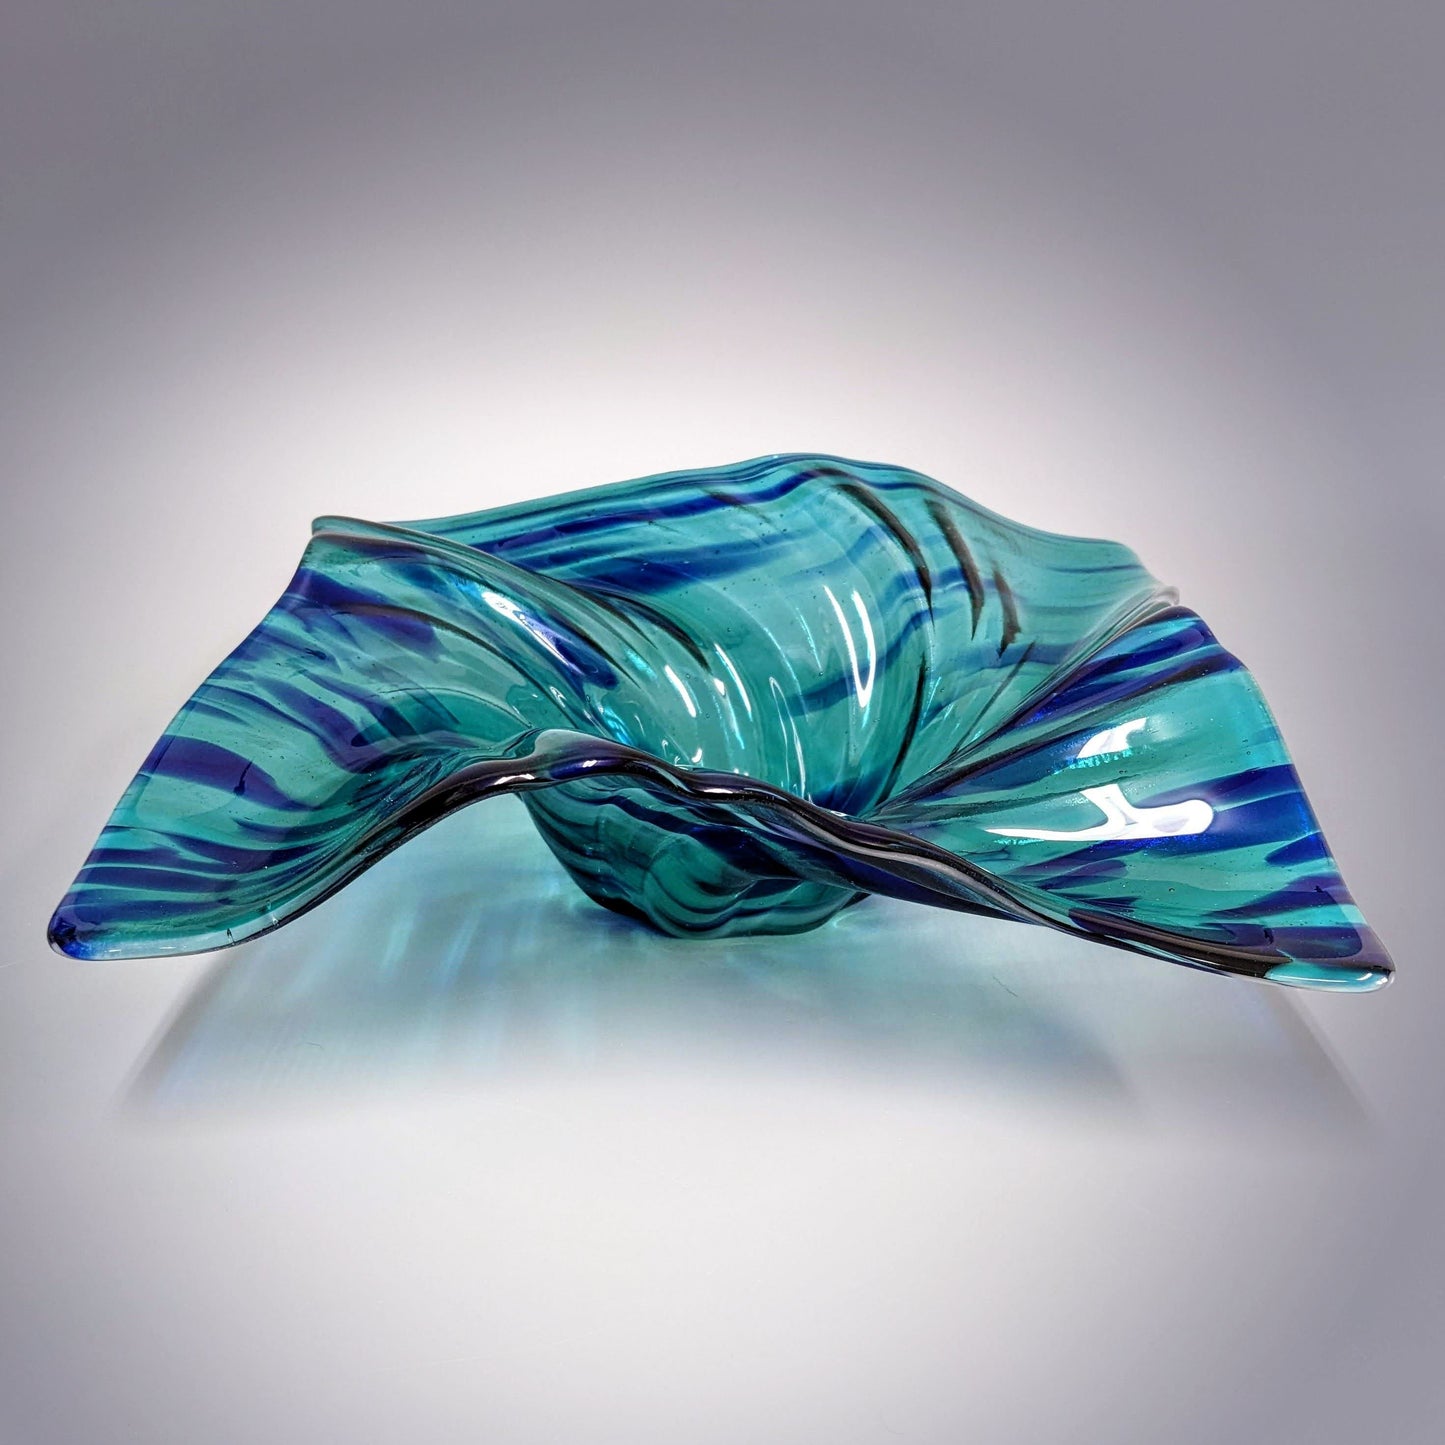 Glass Art Wave Bowl in Aqua Teal Navy Blue